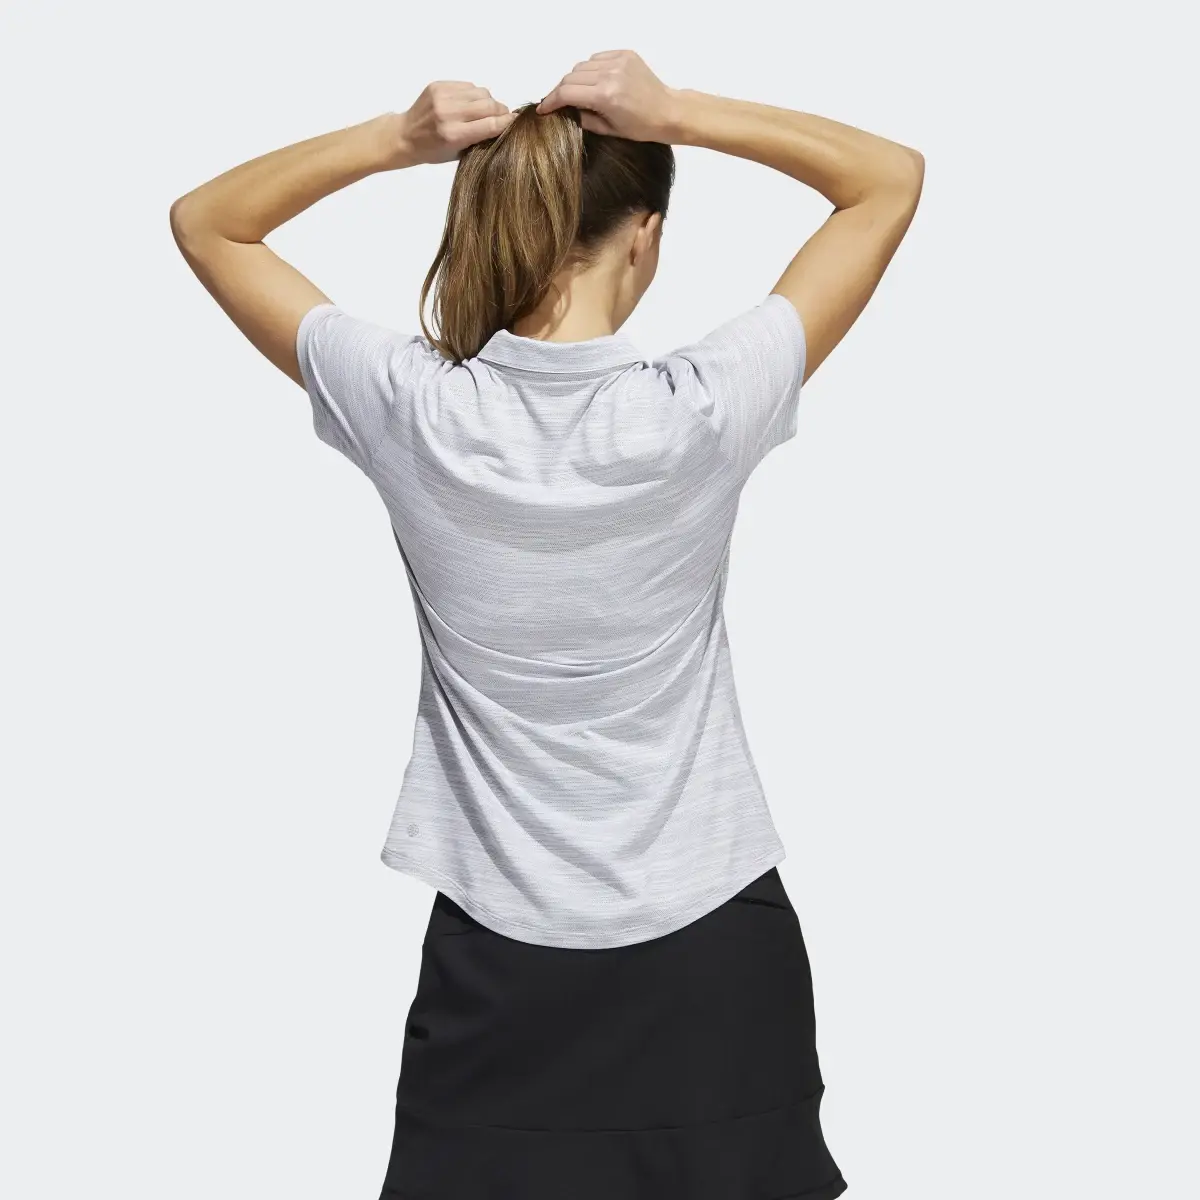 Adidas Space-Dyed Short Sleeve Polo Shirt. 3